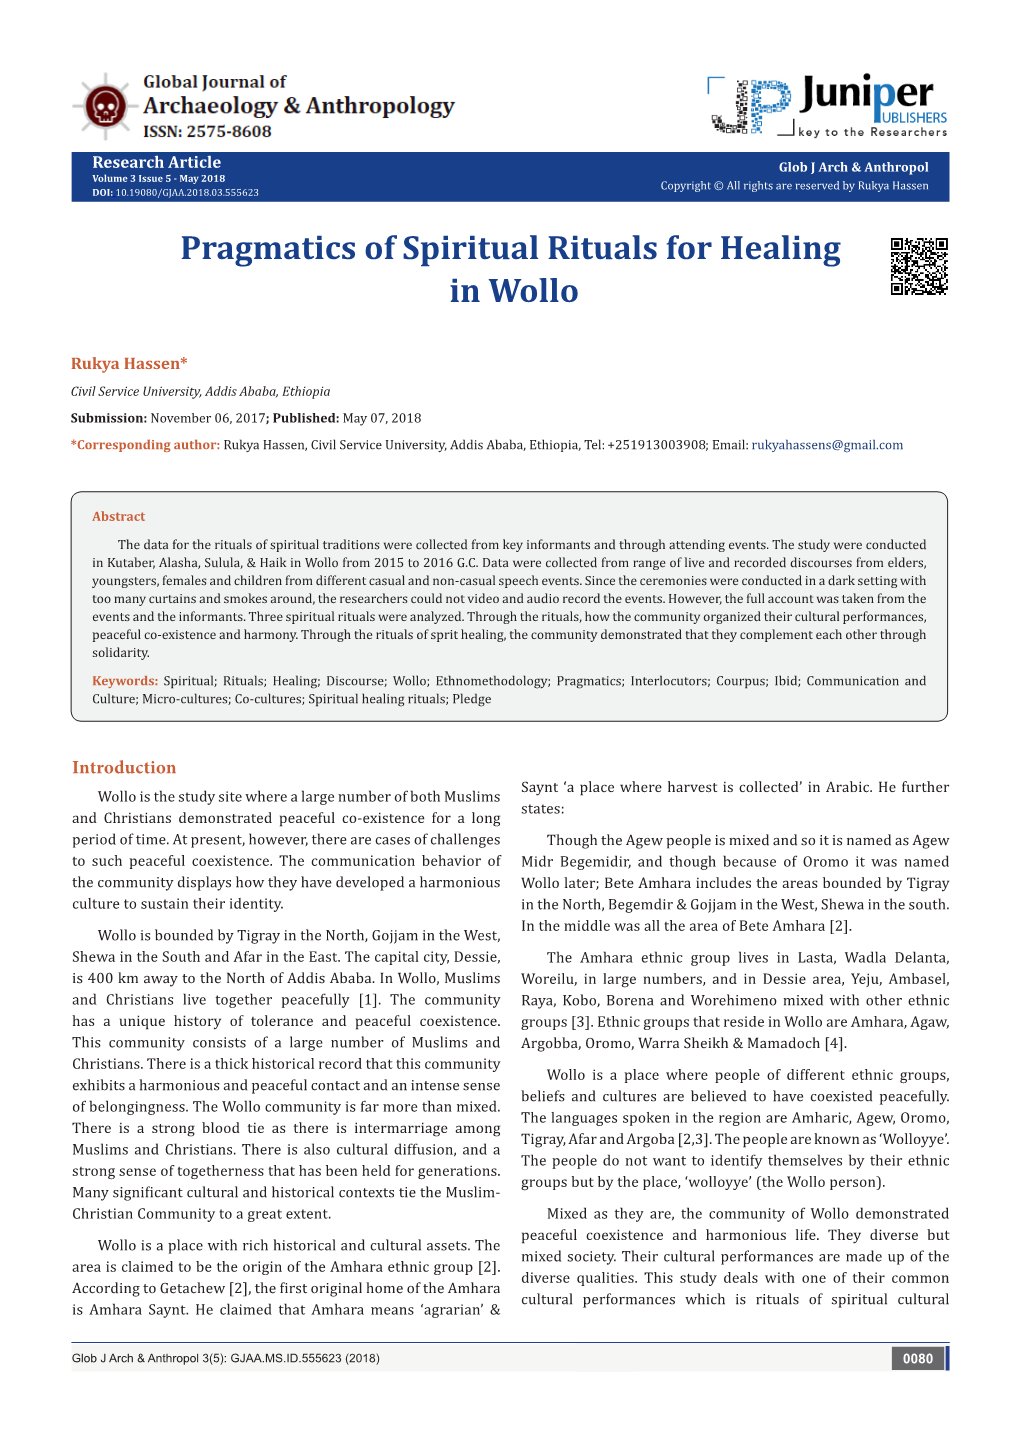 Pragmatics of Spiritual Rituals for Healing in Wollo